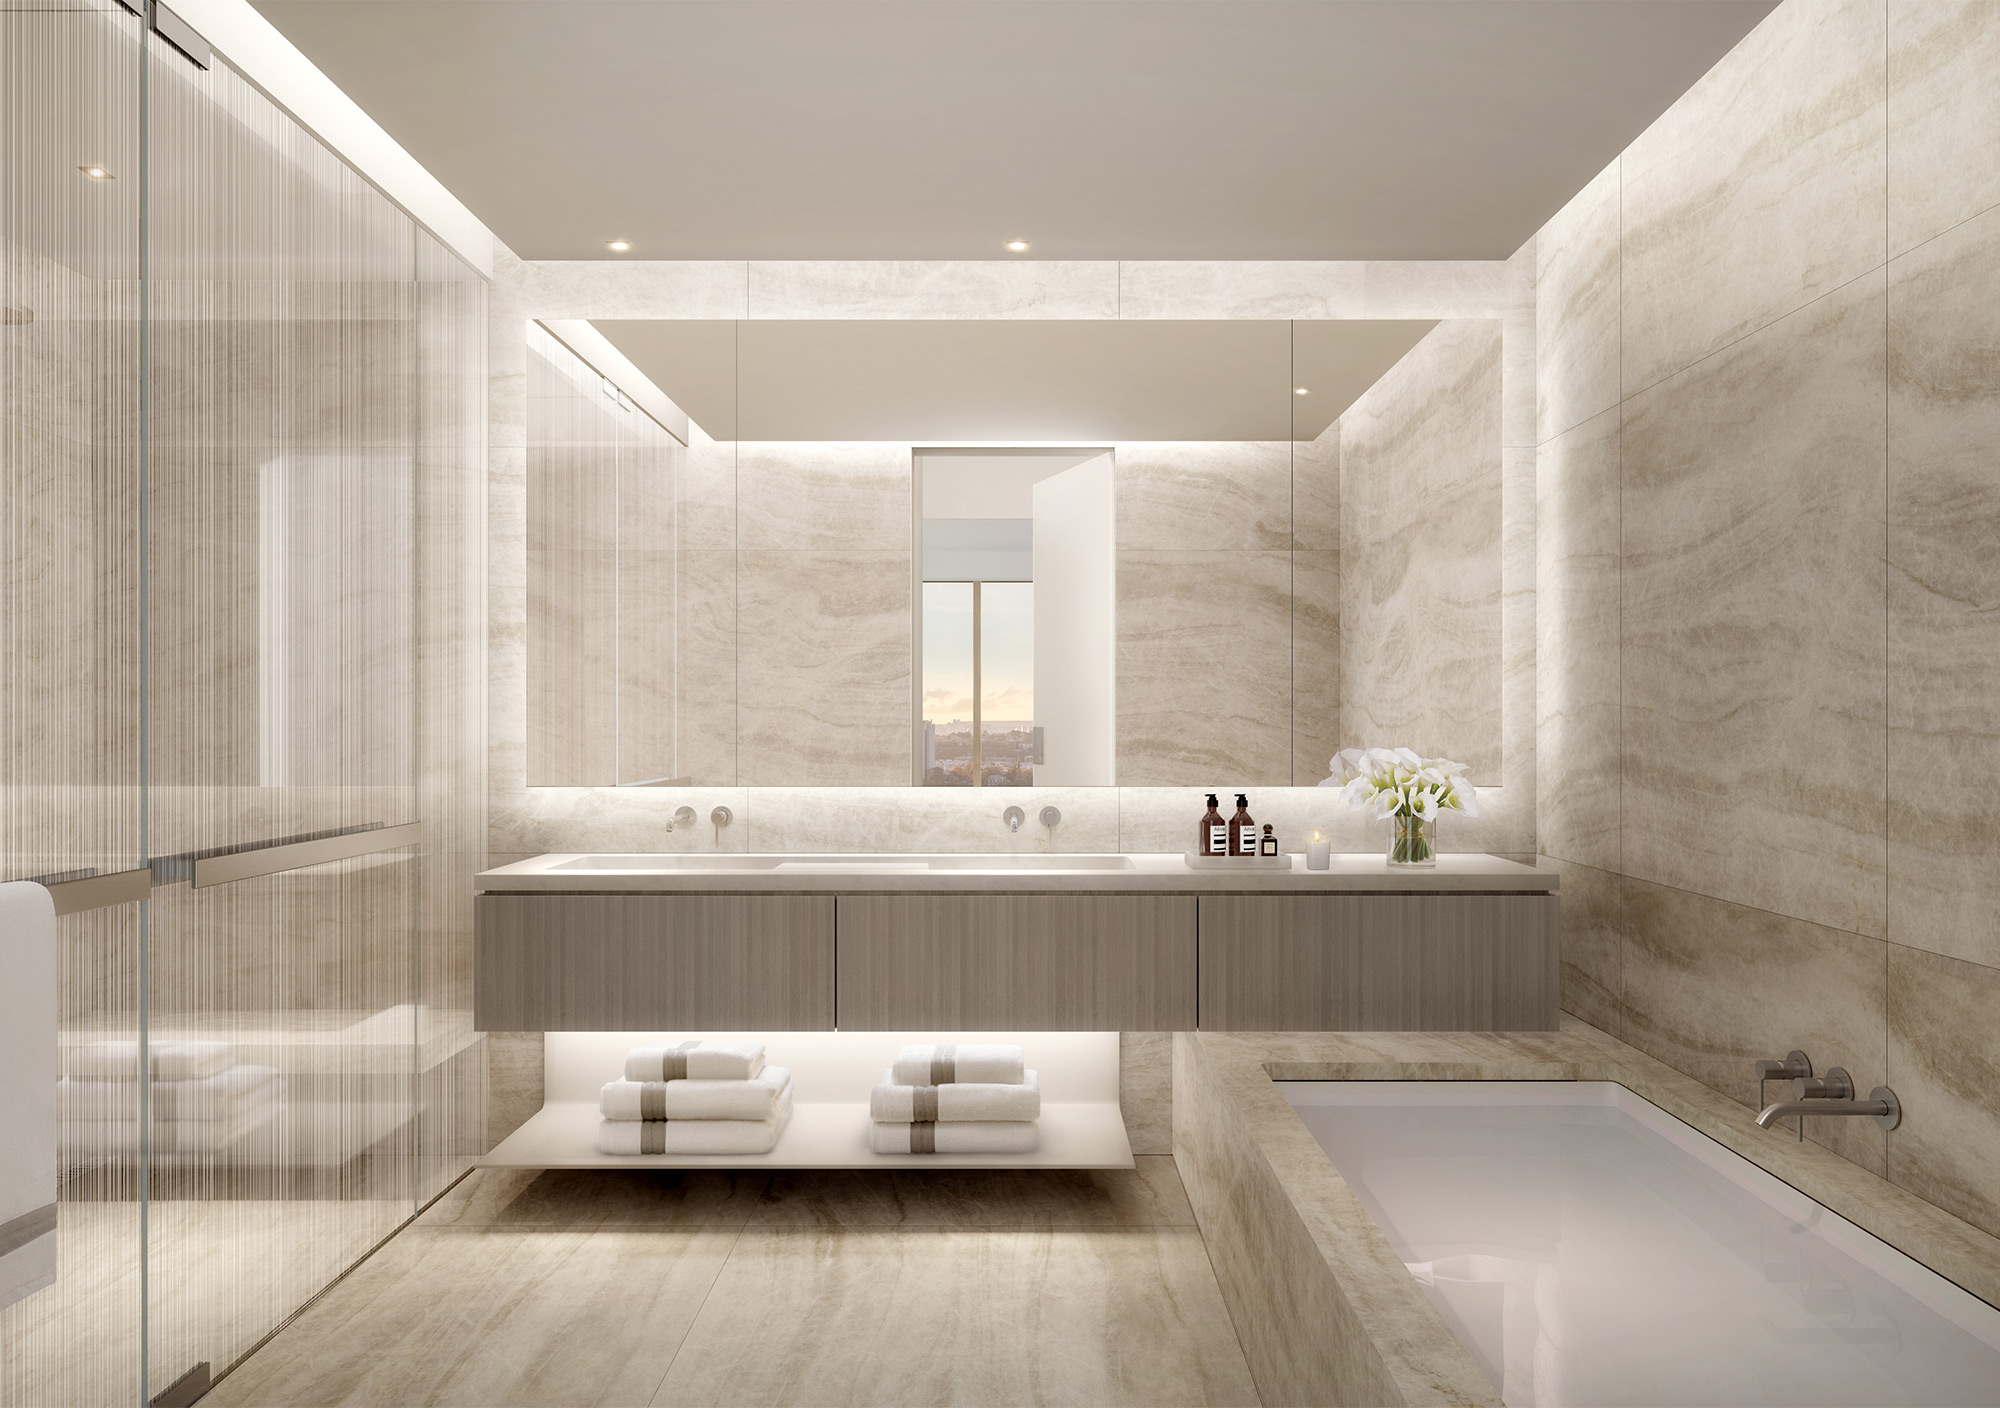 Marble bathroom with built-in bathtub